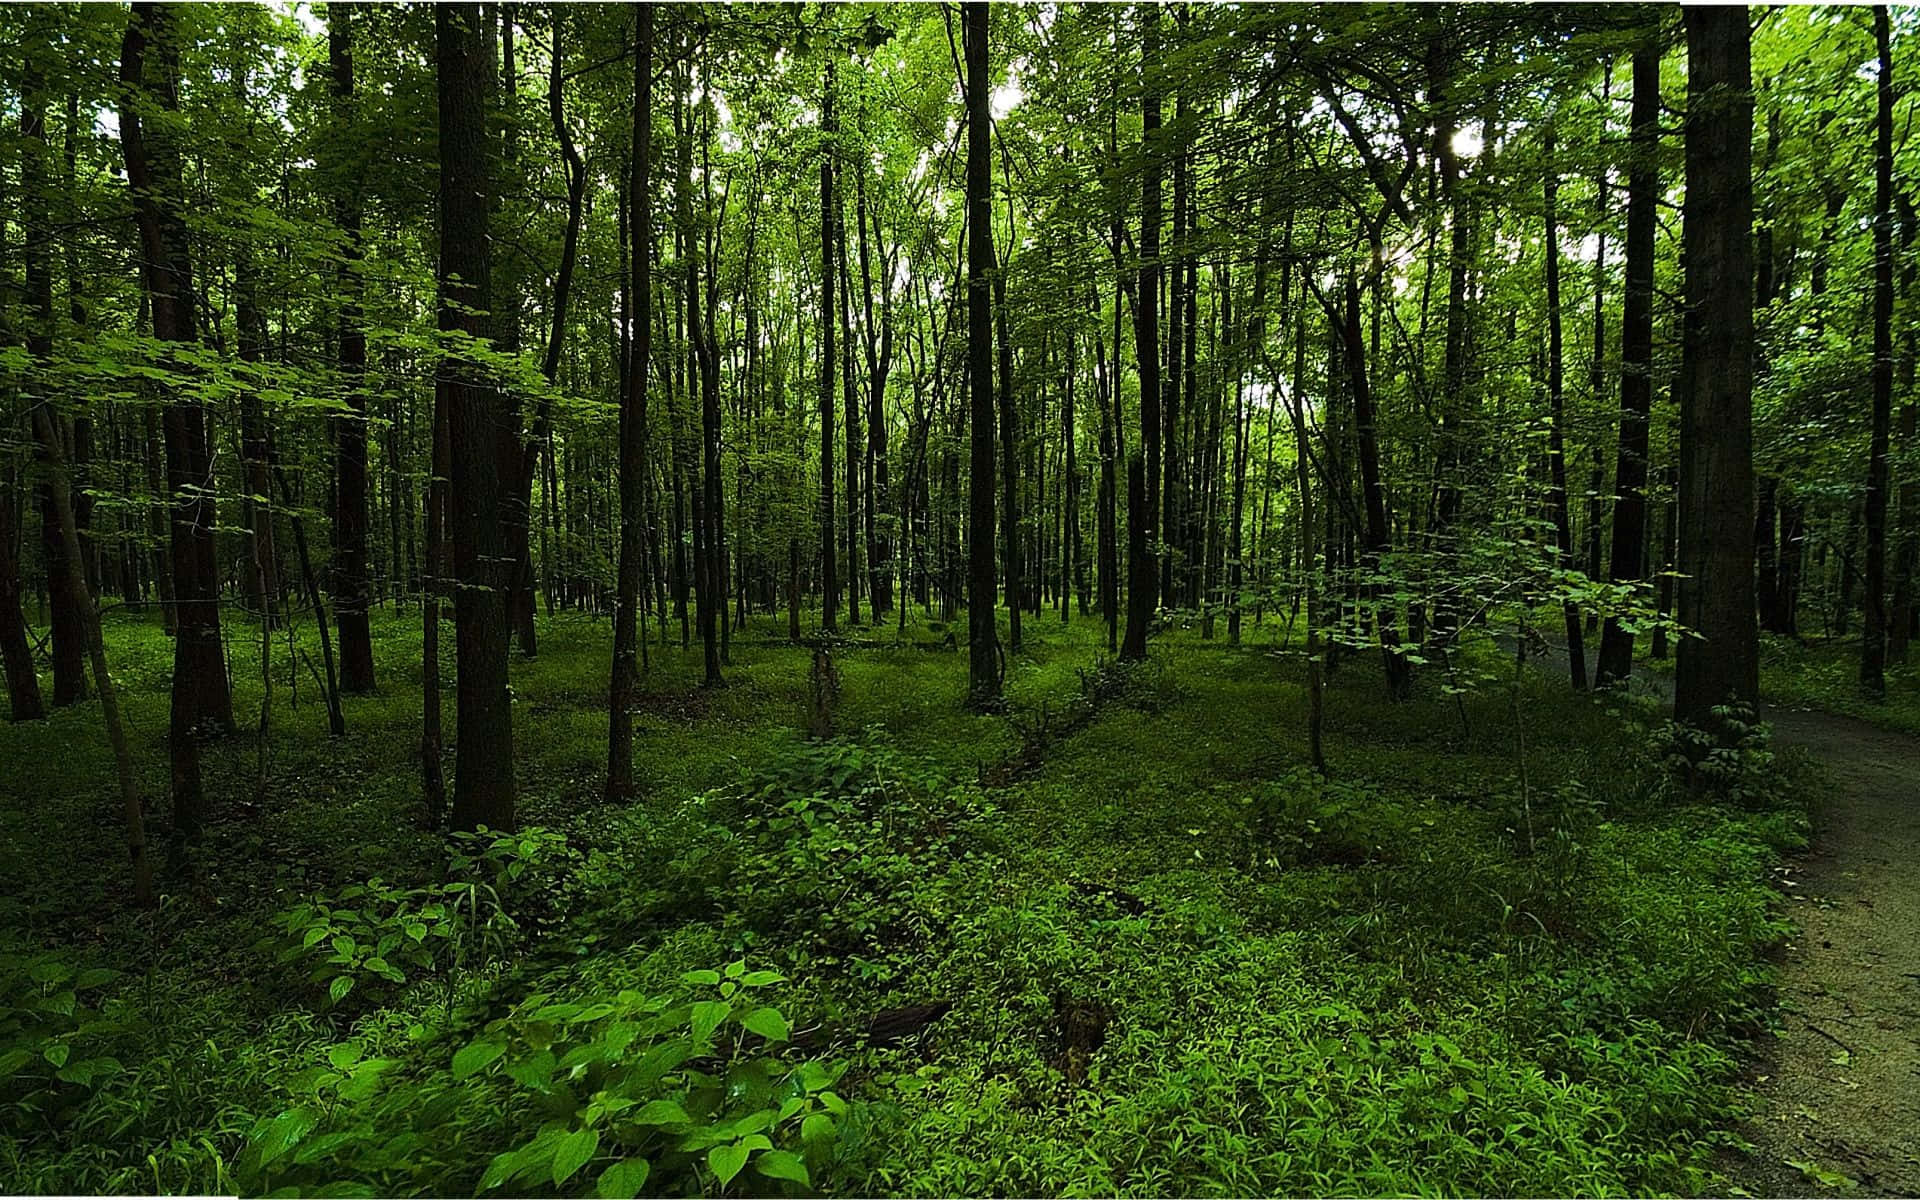 Skoggrönbakgrund